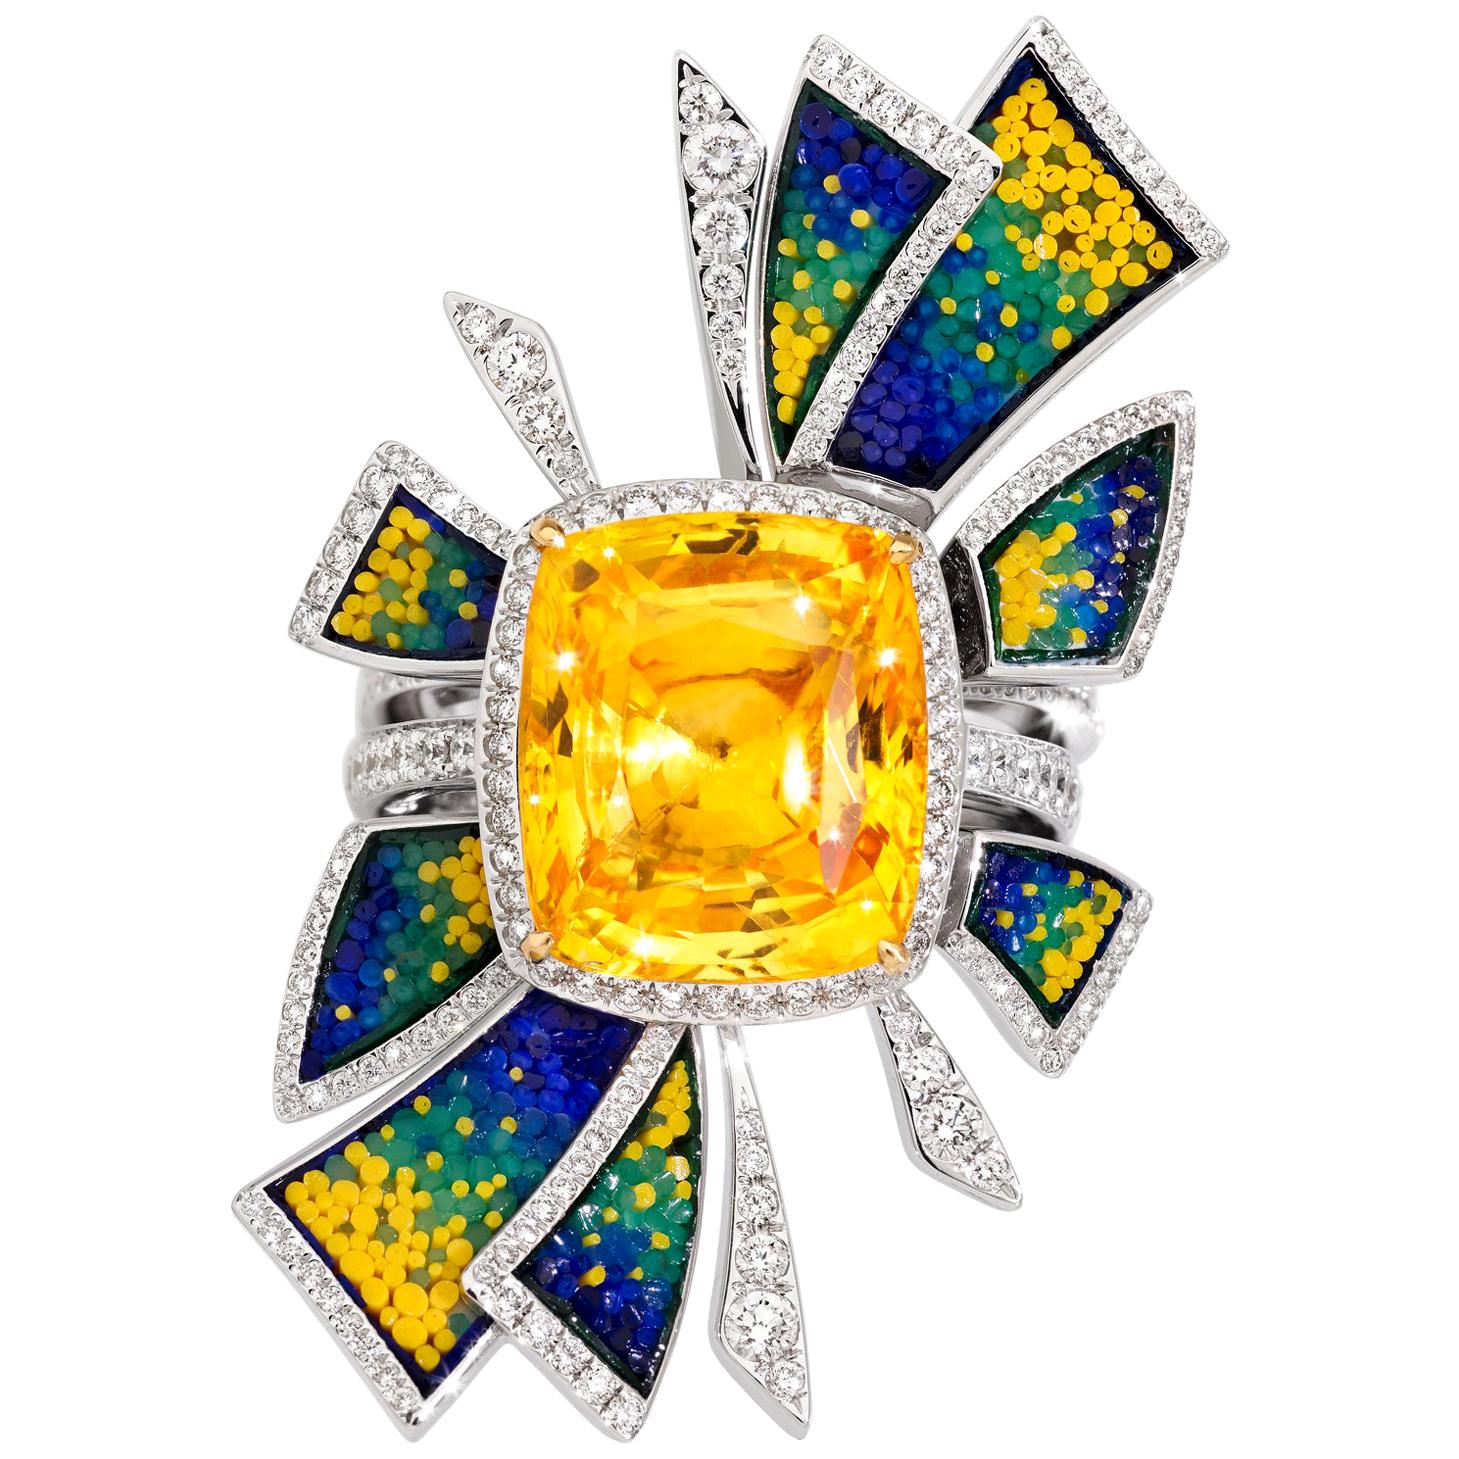 Abnehmbarer Ring, weiße Diamanten, Weißgold, gelber Saphir, Mikromosaik, dekoriert